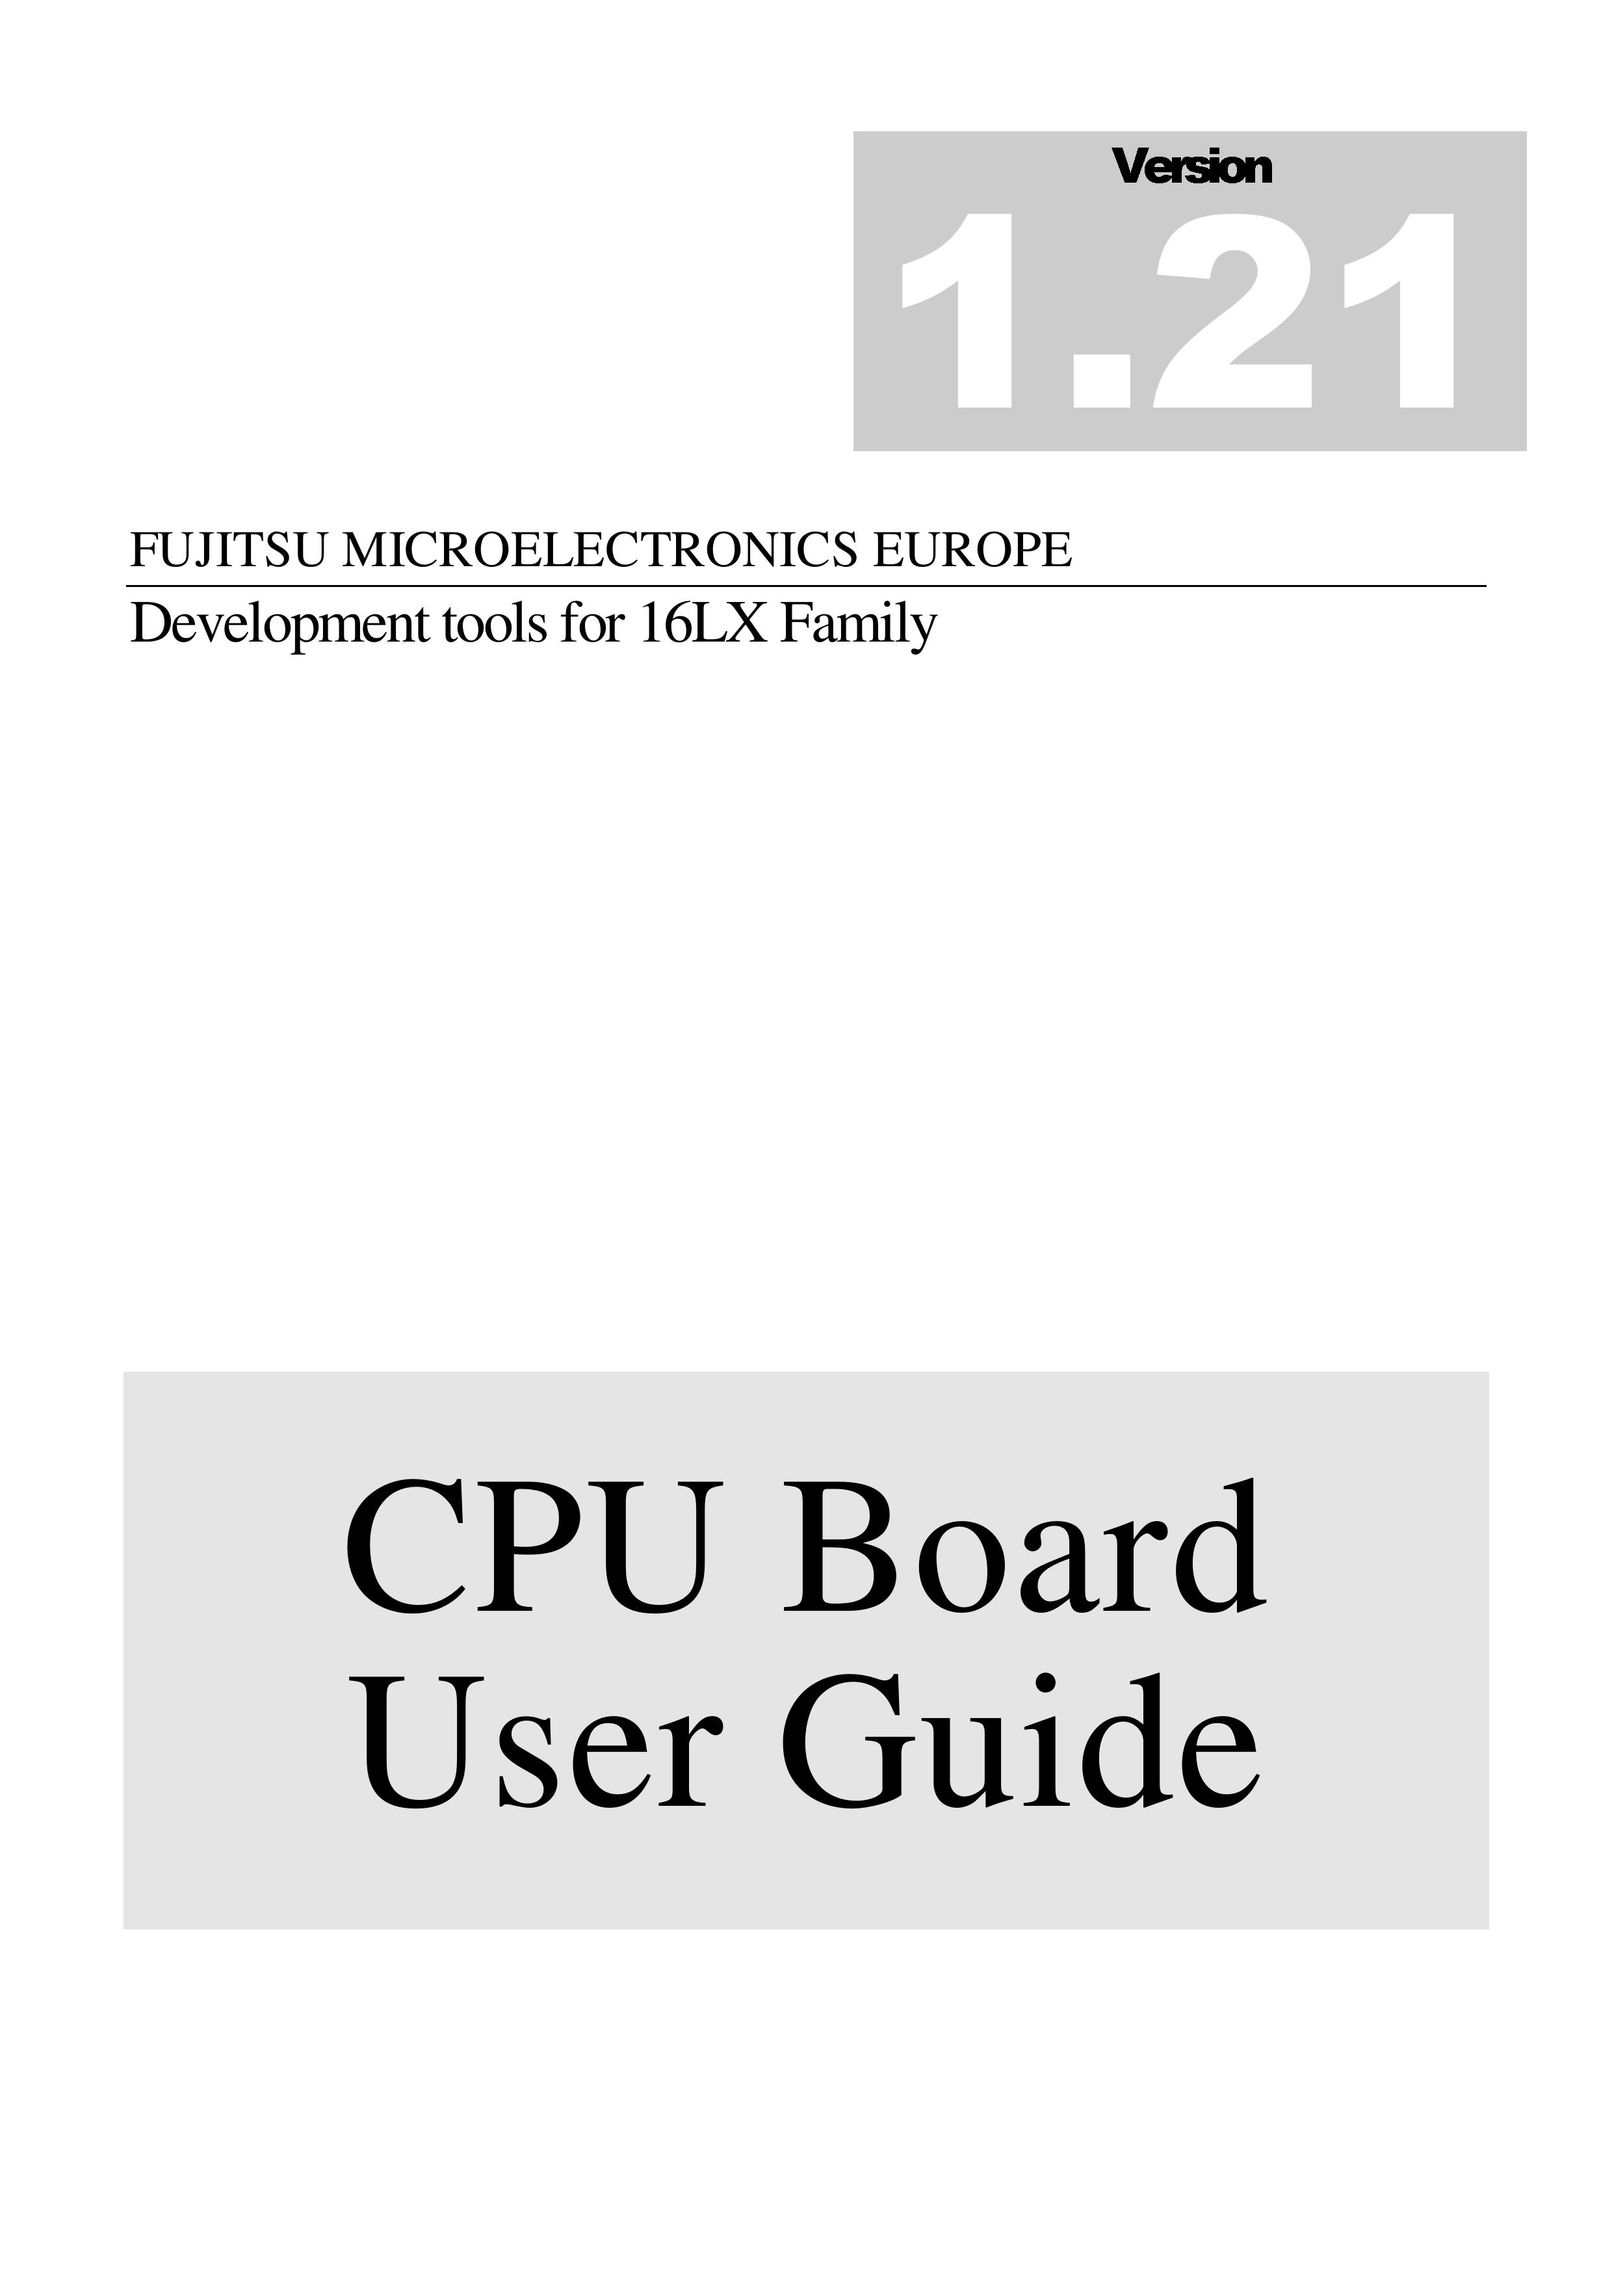 Fujitsu 16LX Whiteboard Accessories User Manual